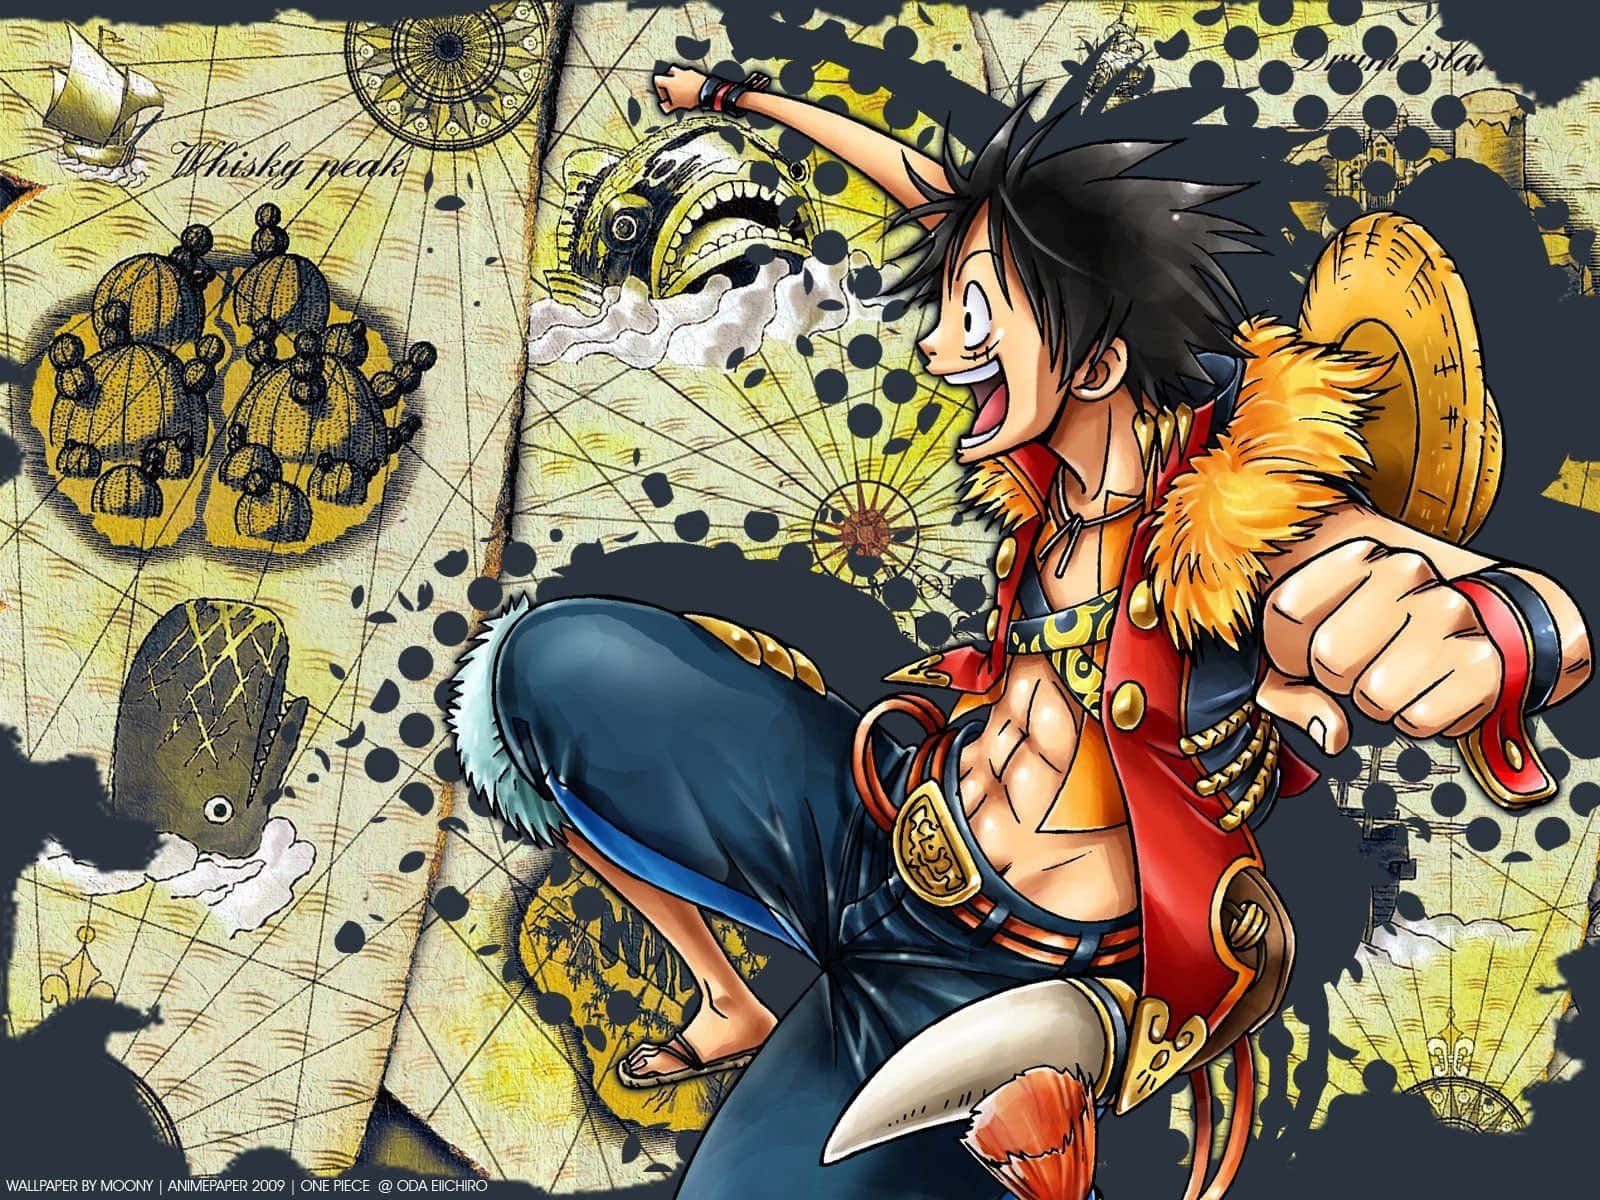 One Piece Background